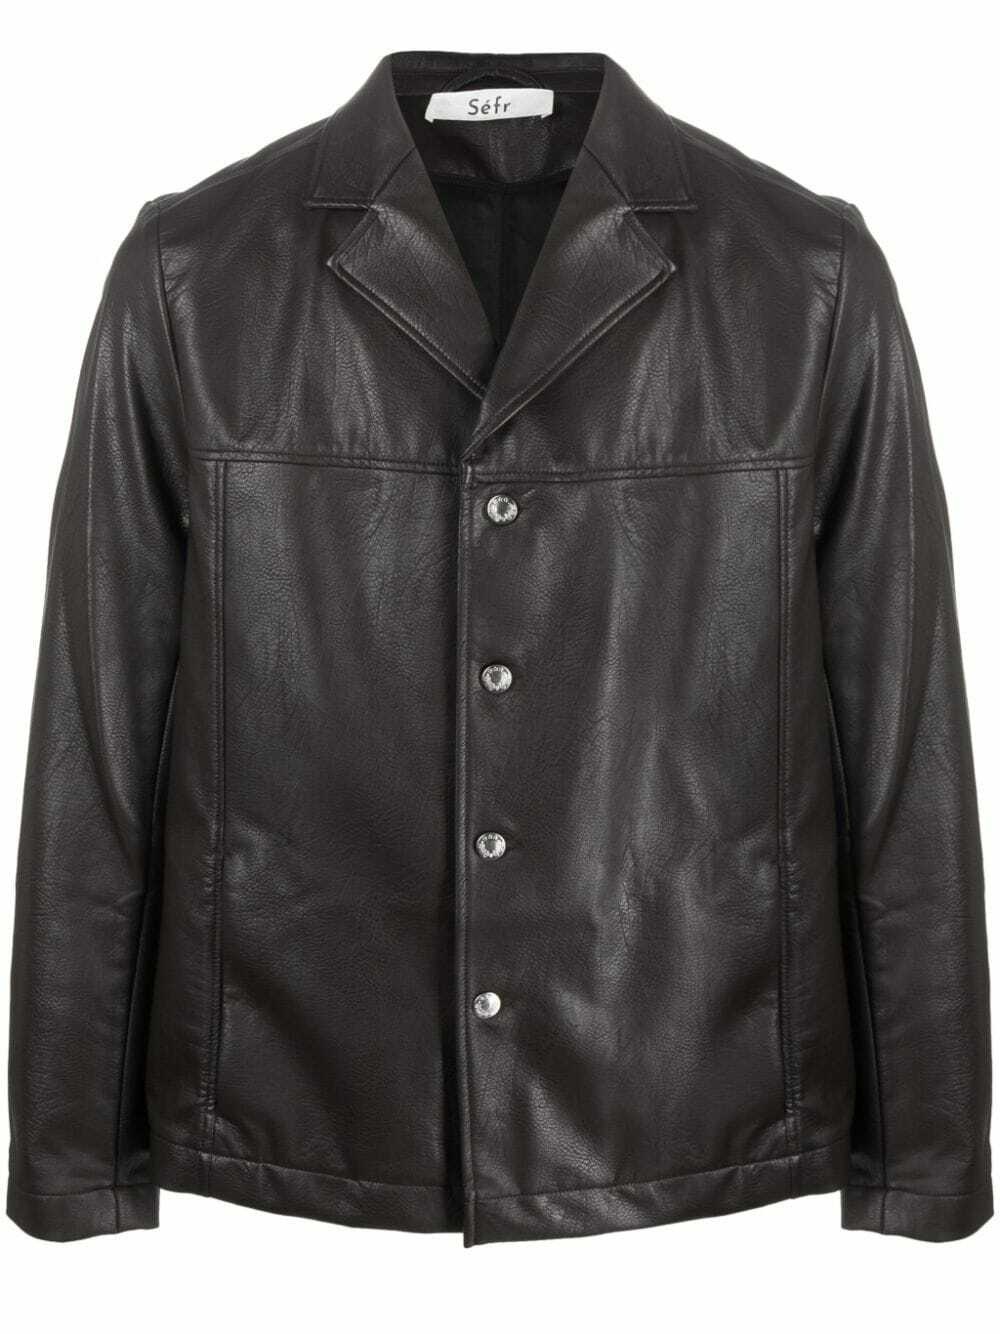 Séfr - Truth Faux Leather Jacket - Black Séfr